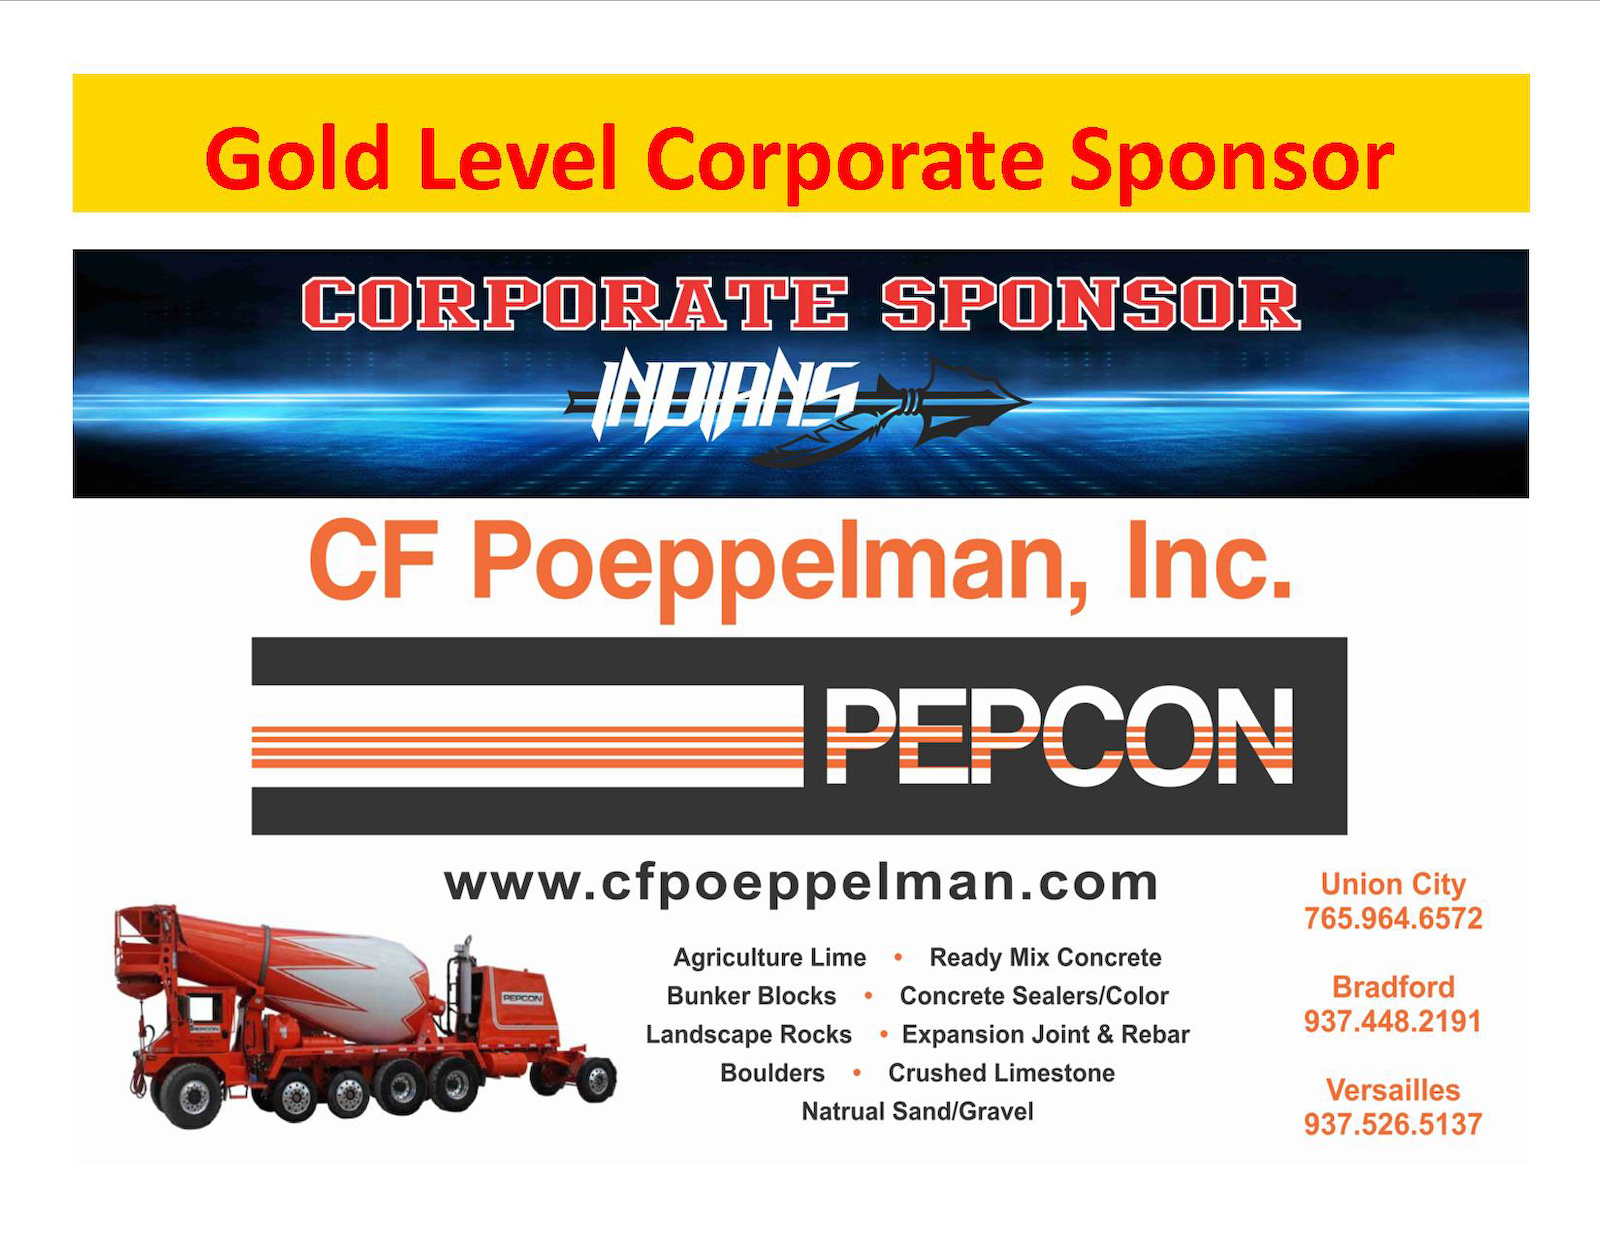 CF Poeppleman, Inc. Pepcon